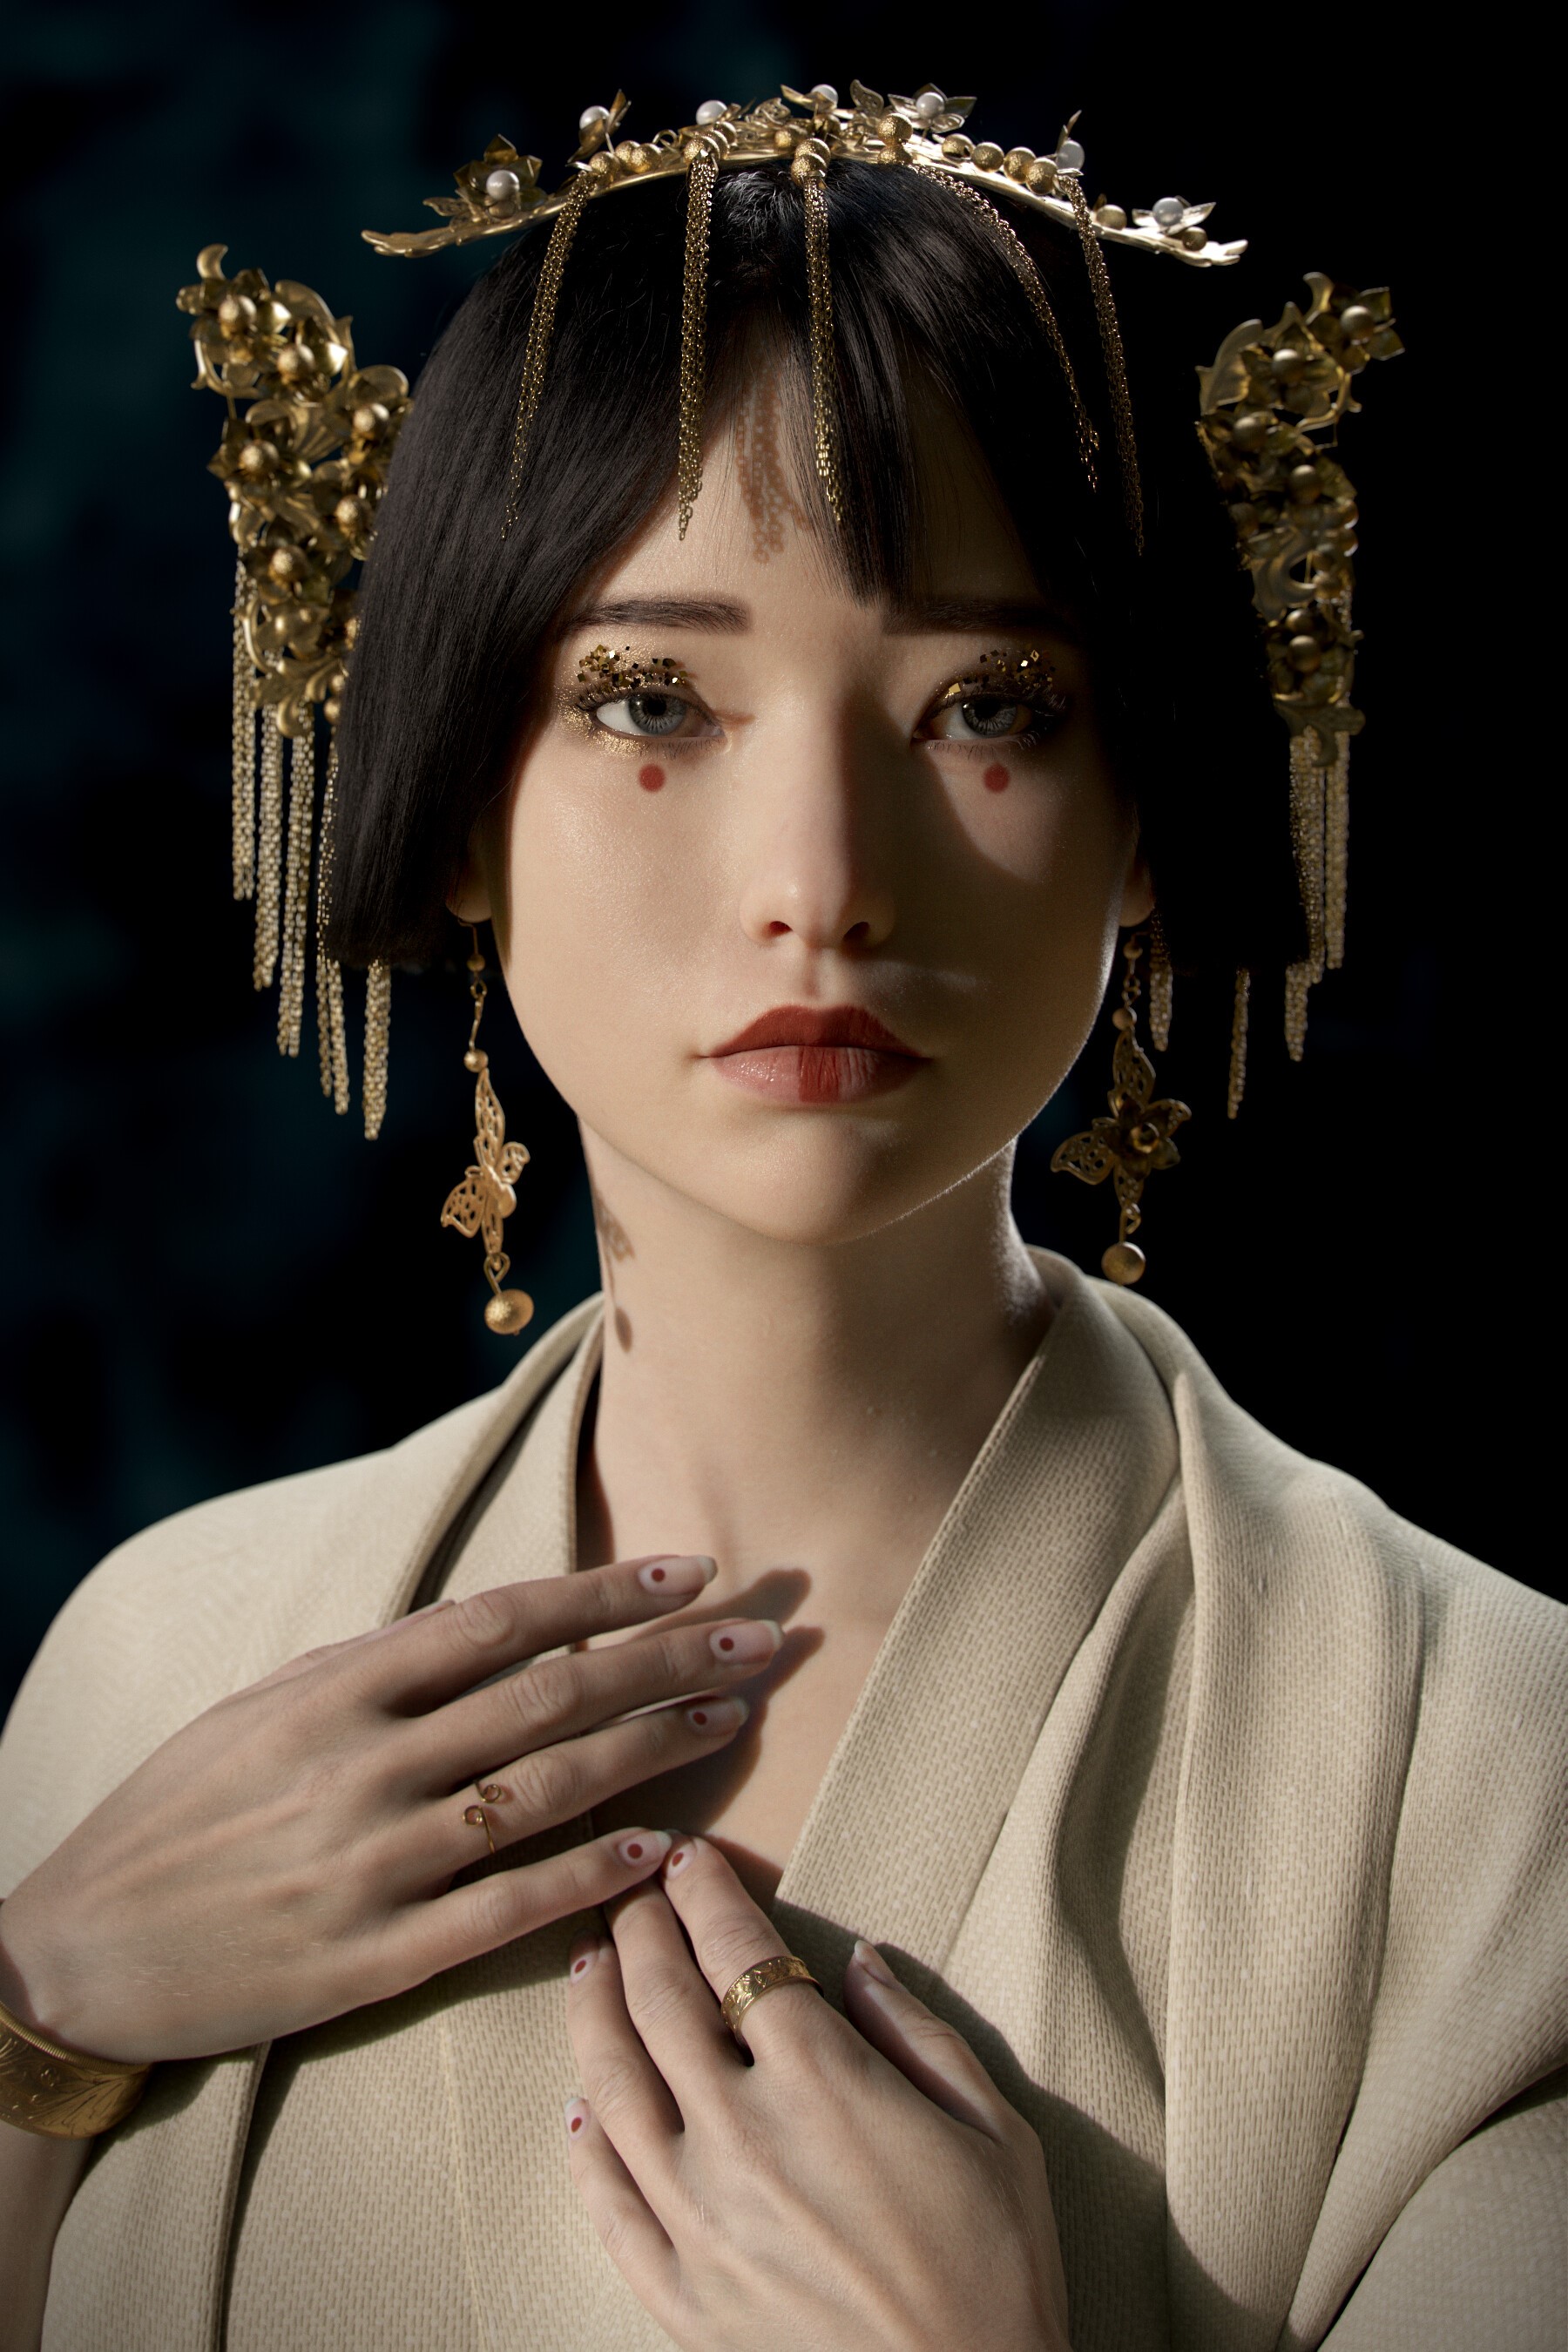 3D, CGI, render, women, portrait, makeup, fantasy girl, face, Asian, simple background Gallery HD Wallpaper